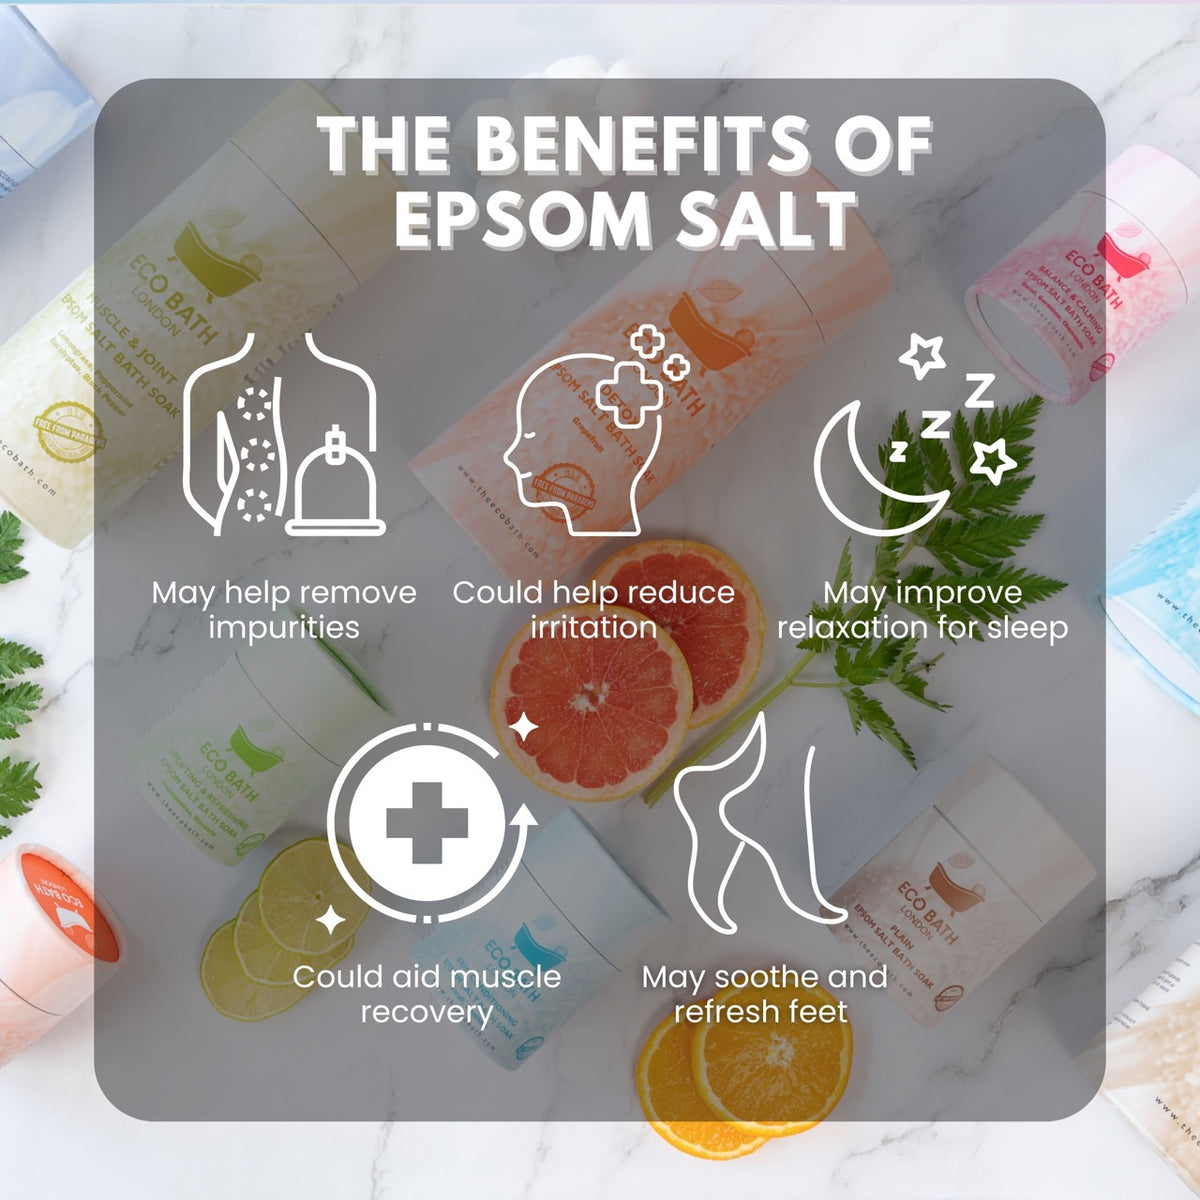 Eco Bath Muscle and Joint Epsom Salt Bath Soak - Tube